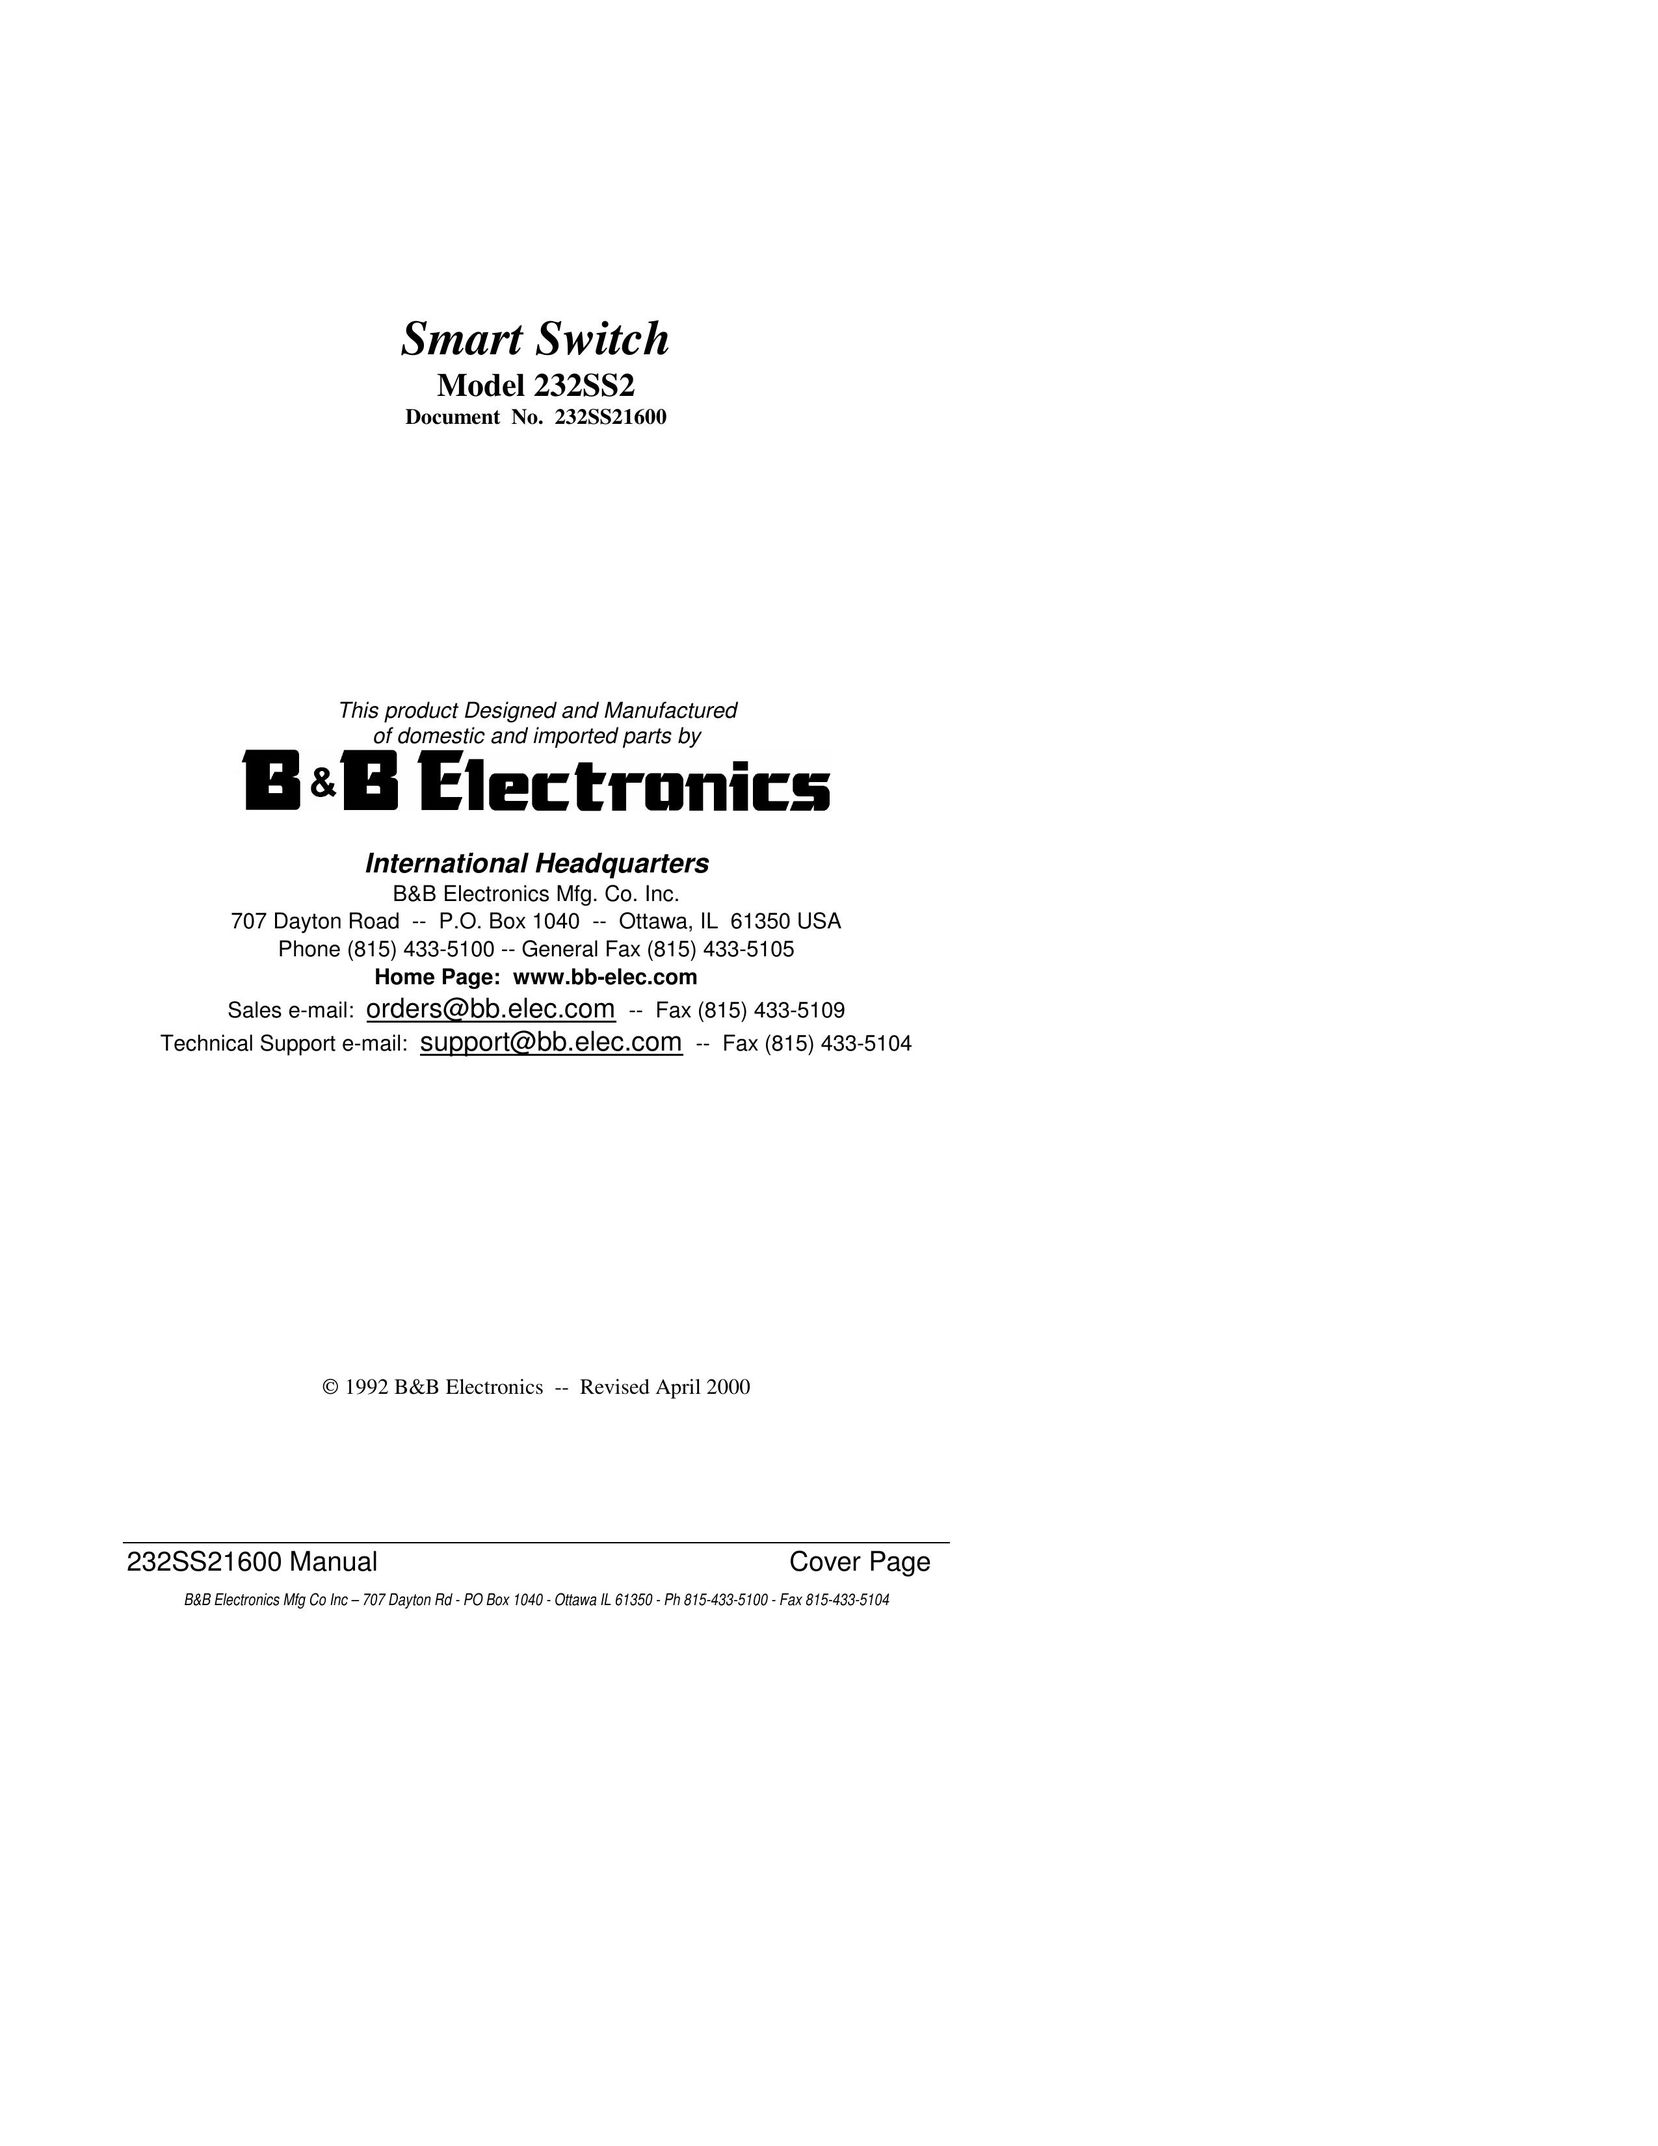 B&B Electronics 232SS21600 Switch User Manual